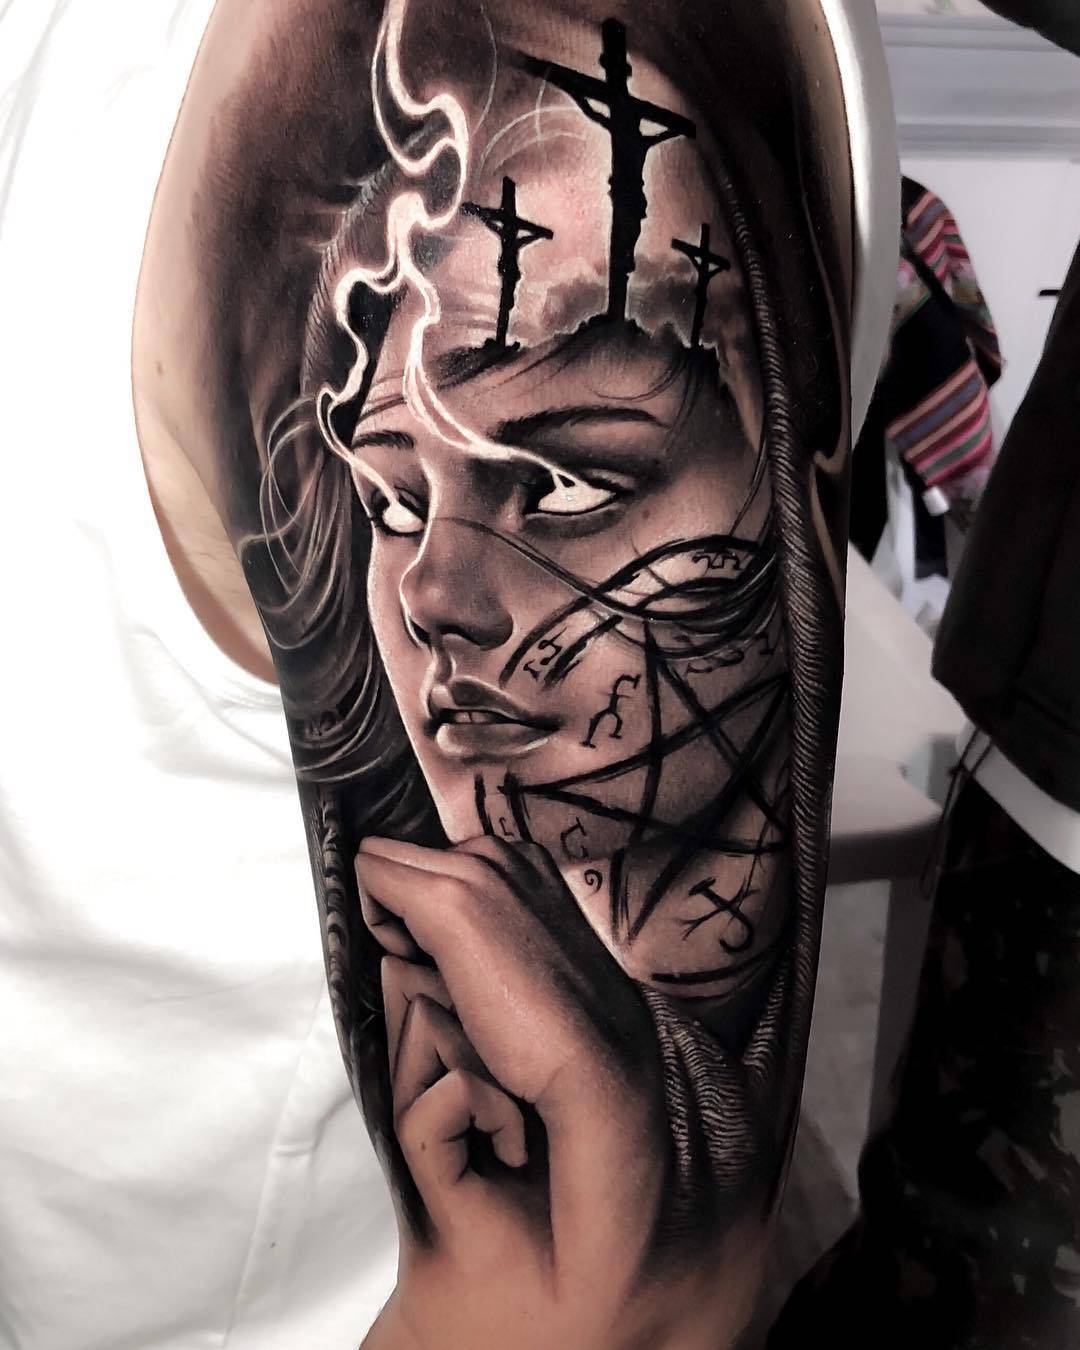 Tattoo artist Samurai Standoff